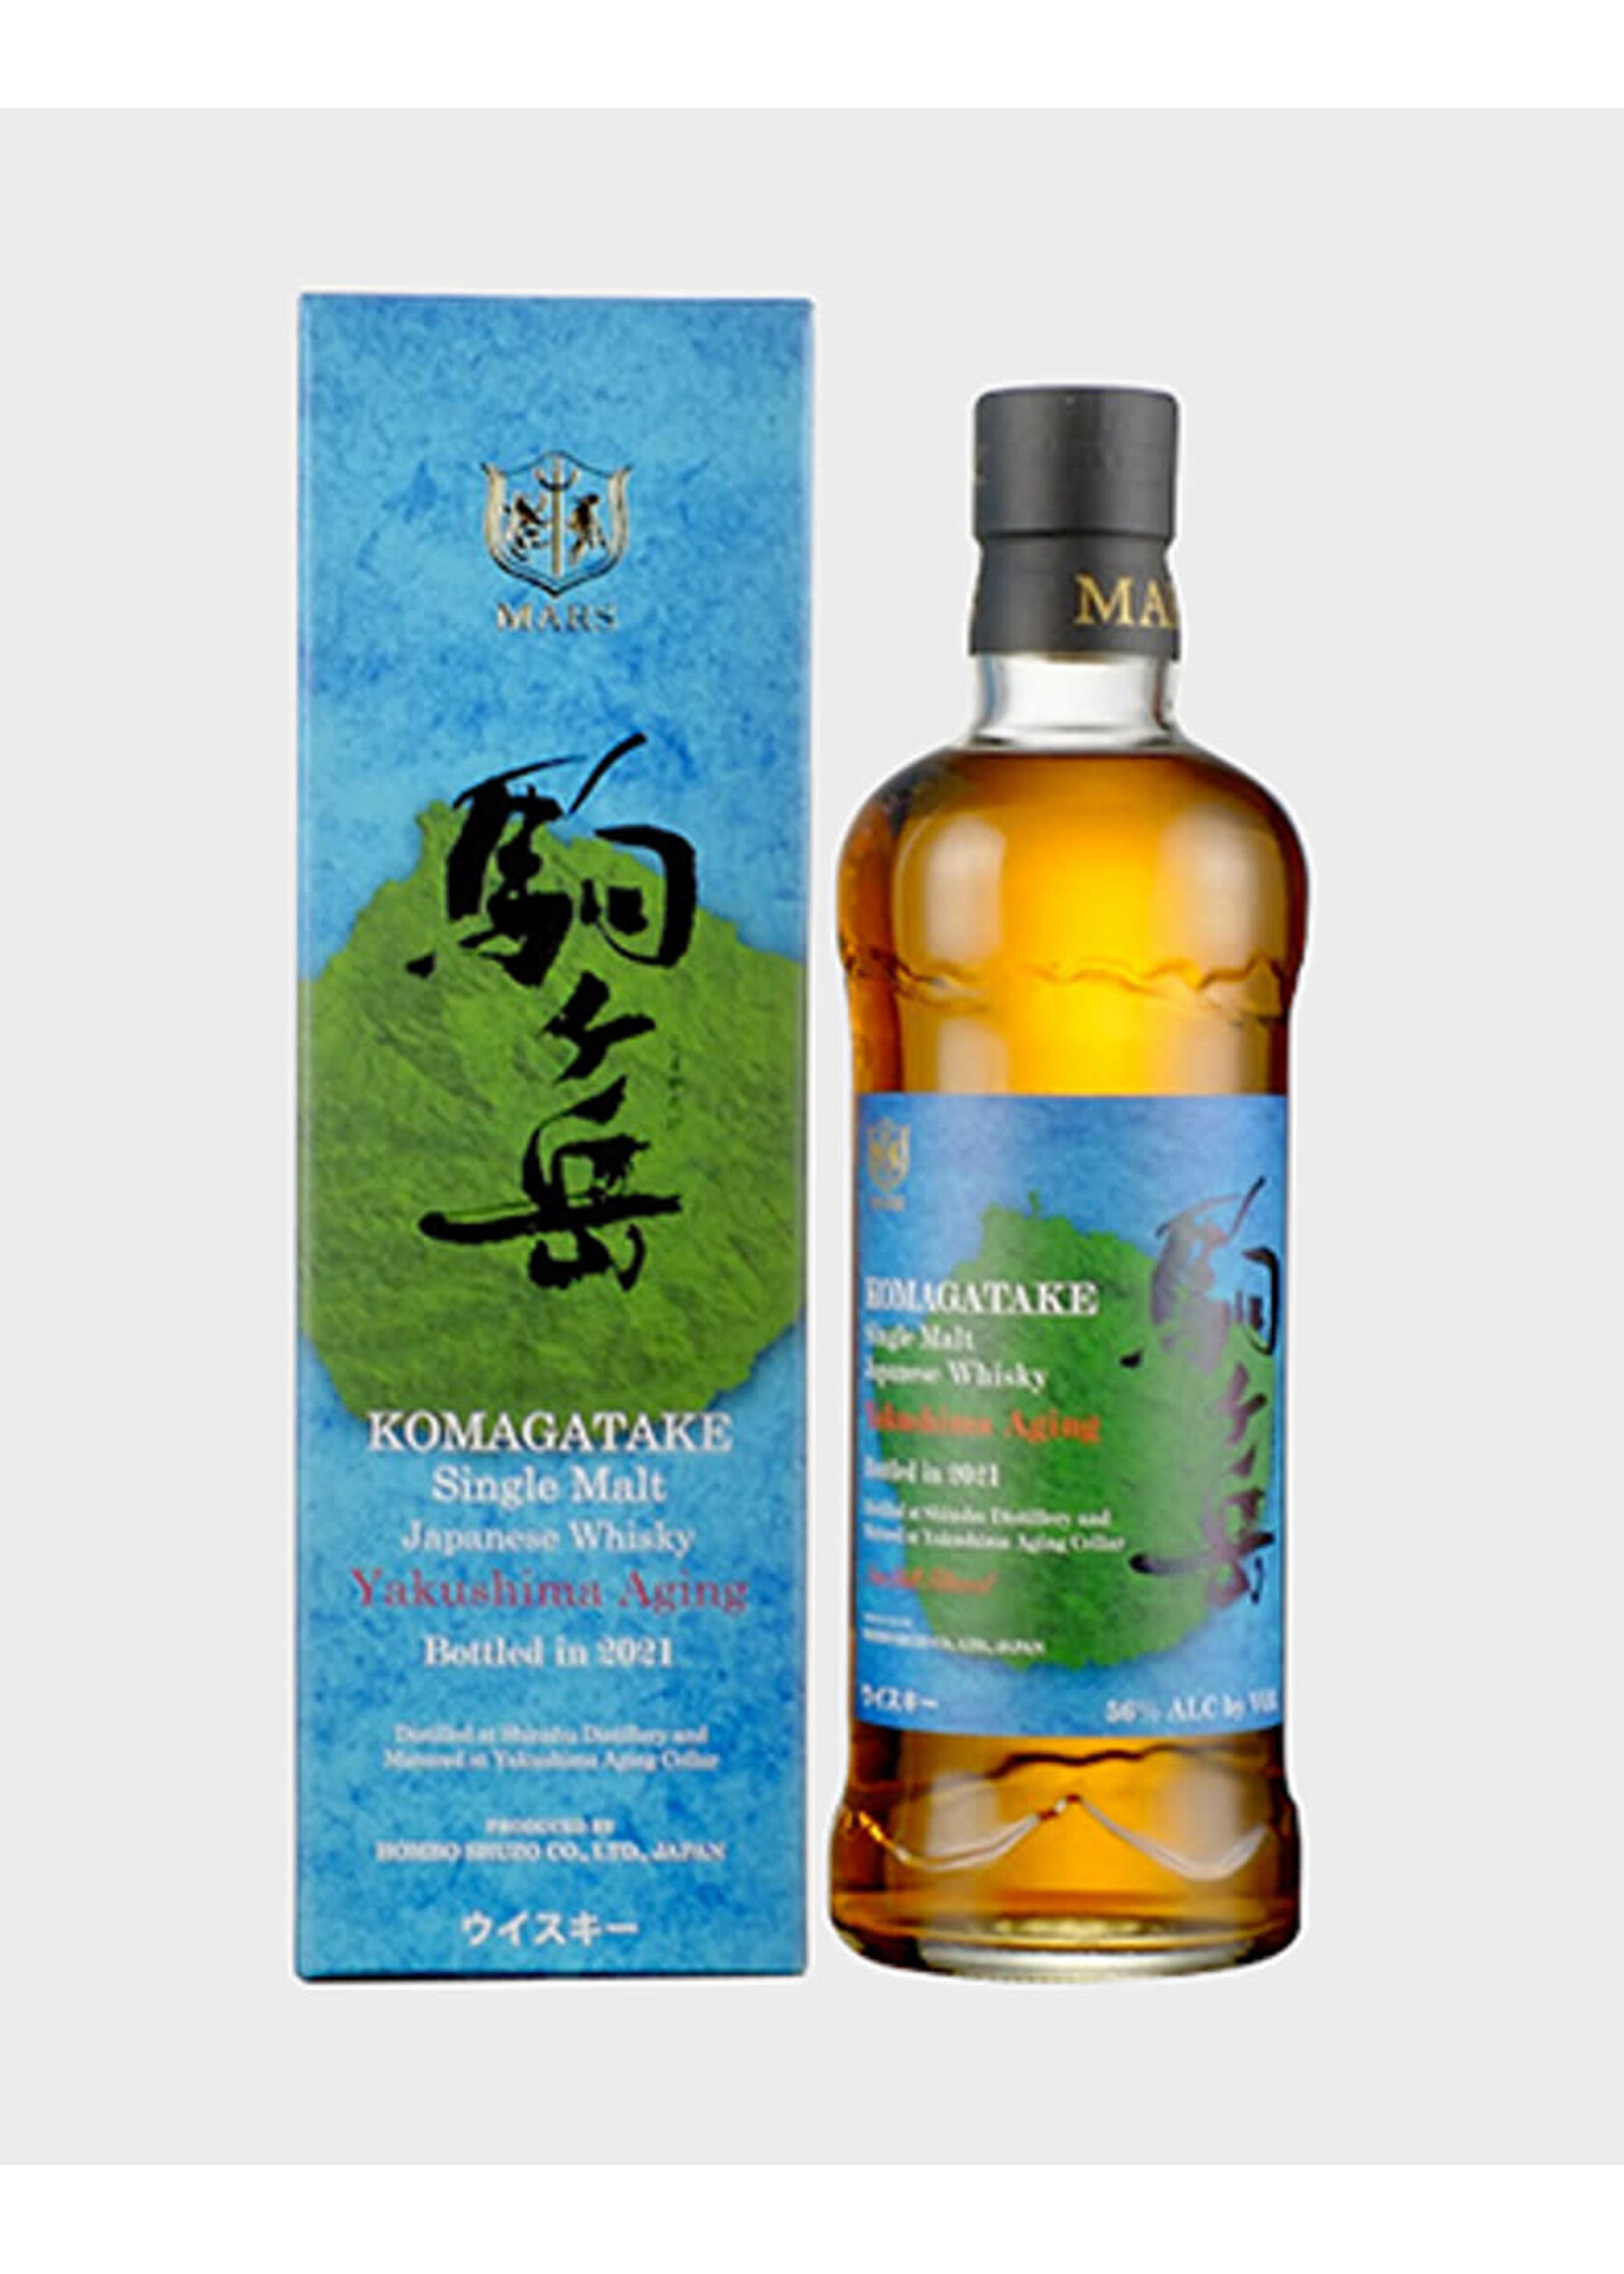 Mars Shinshu Mars Shinshu / Komagatake Single Malt Japanese Whisky Yakushima Aging 2021 Edition 56% abv / 700mL